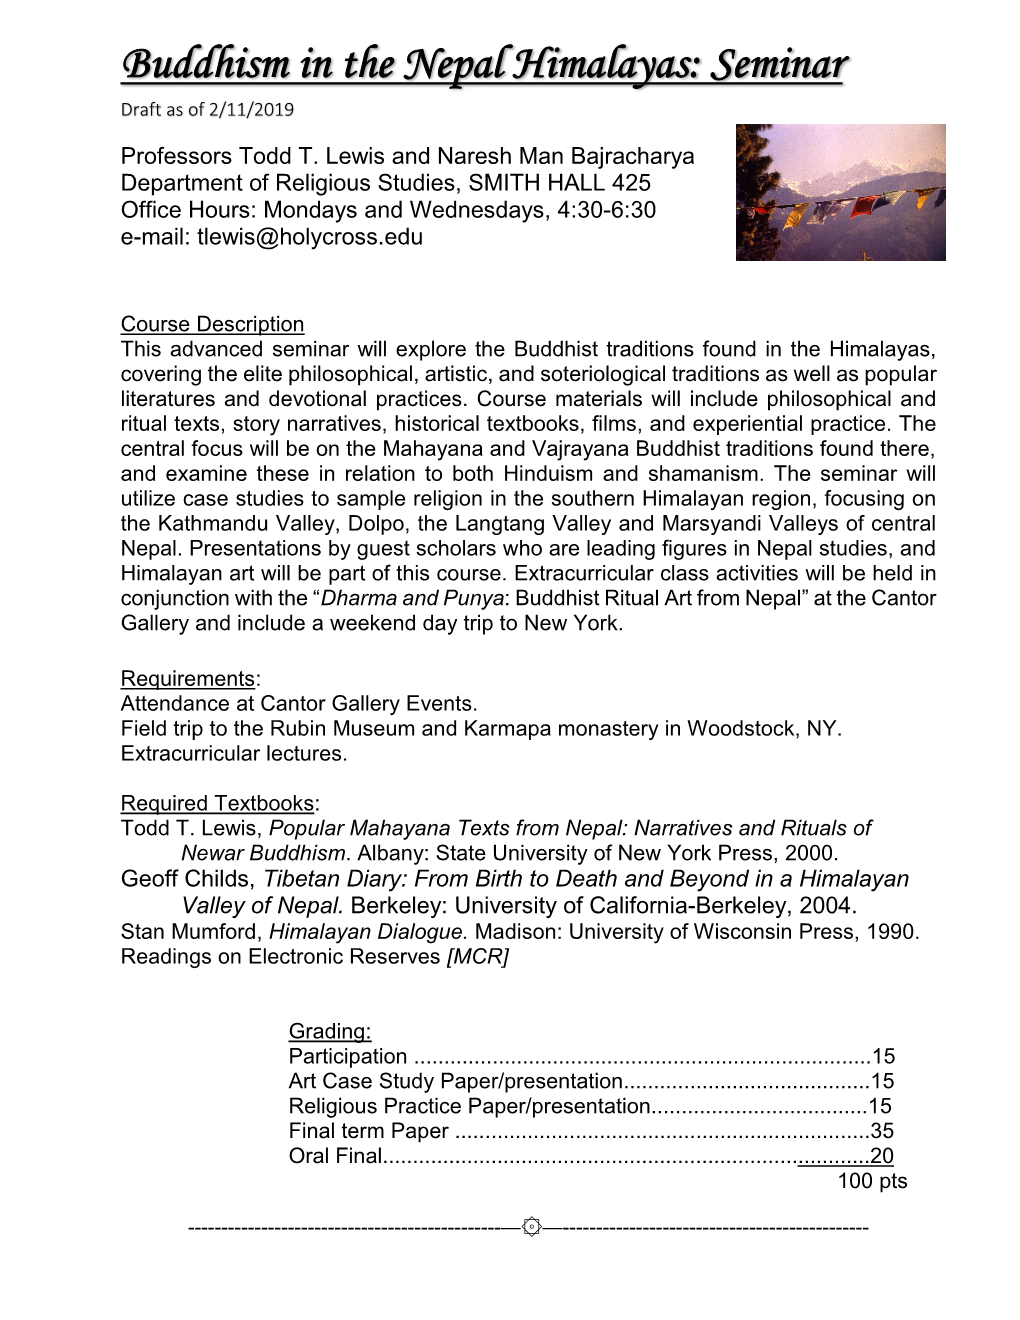 Buddhism in the Nepal Himalayas: Seminar Draft As of 2/11/2019